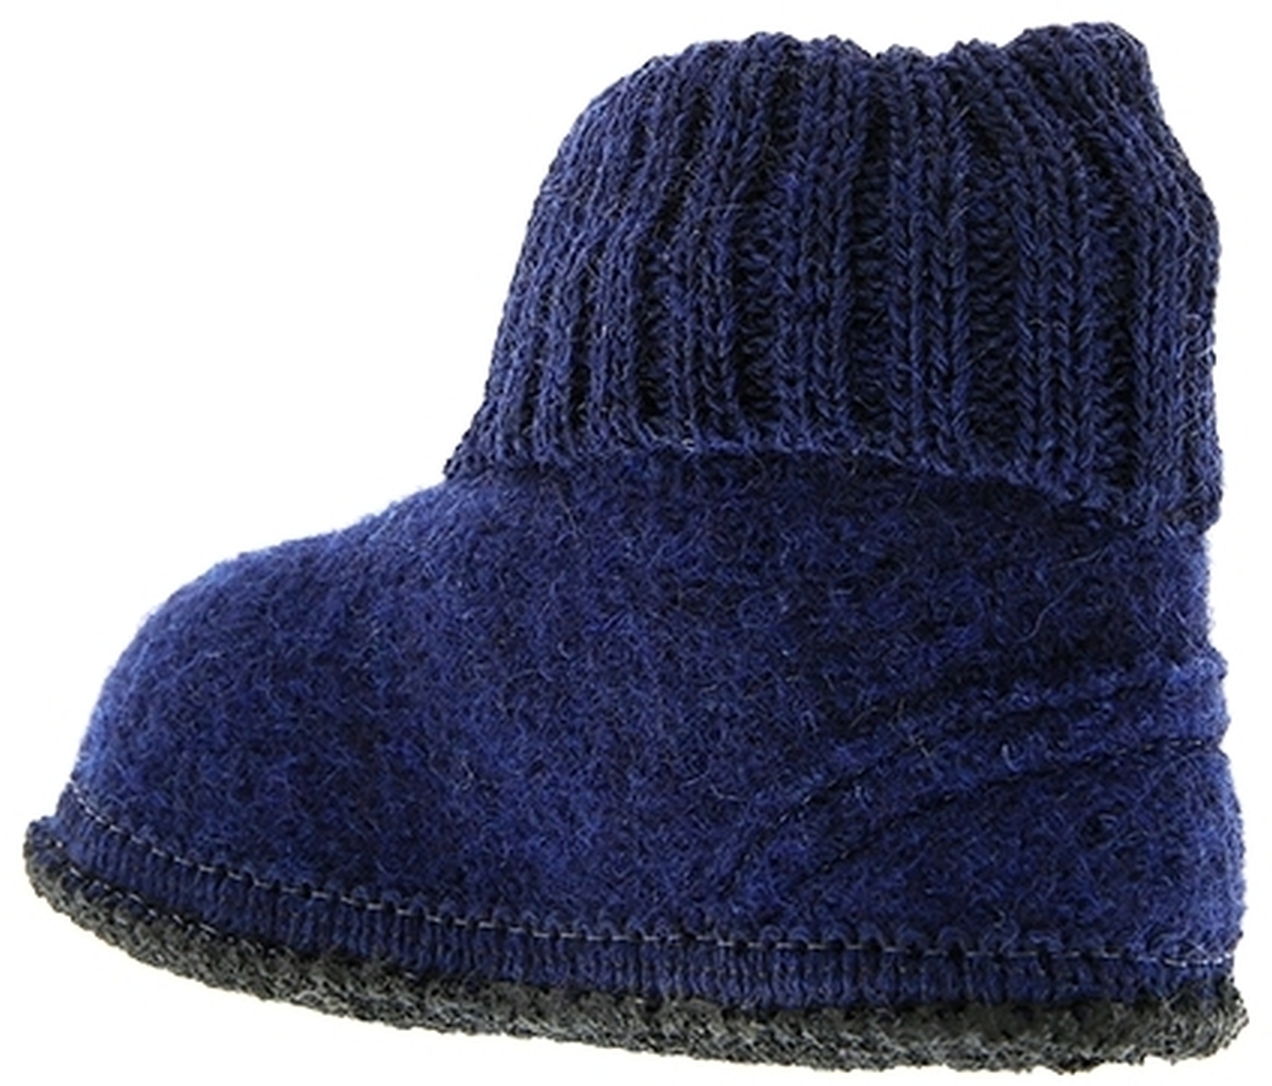 Cozy Dark Blue Wool